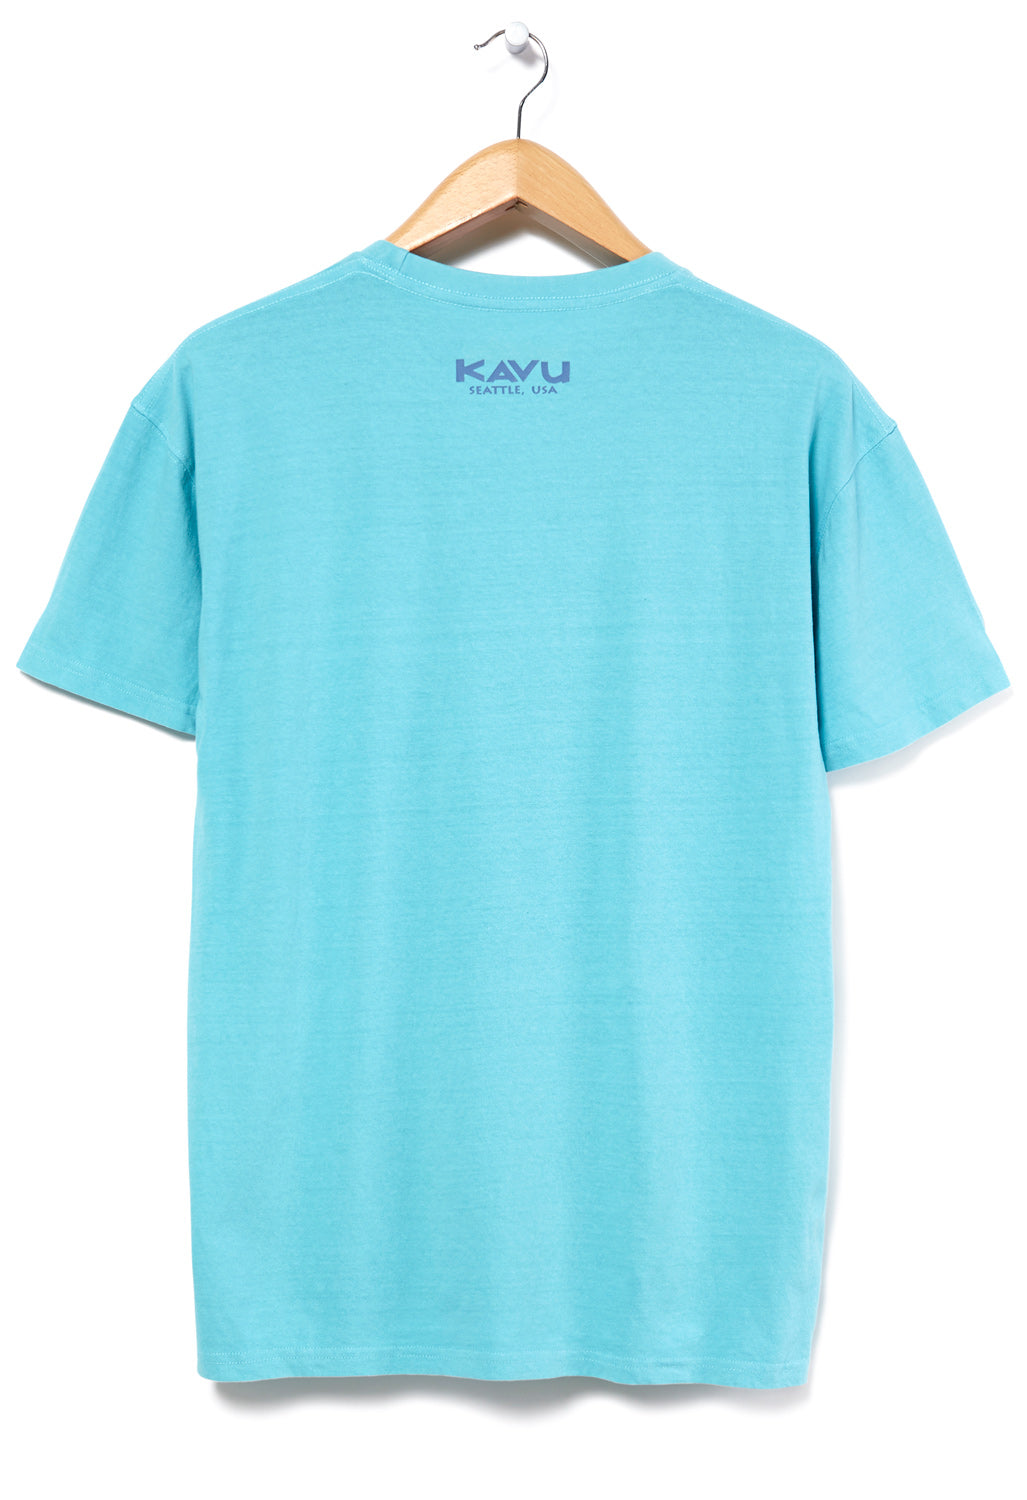 KAVU Sticker Square Men's T-Shirt - Seafoam